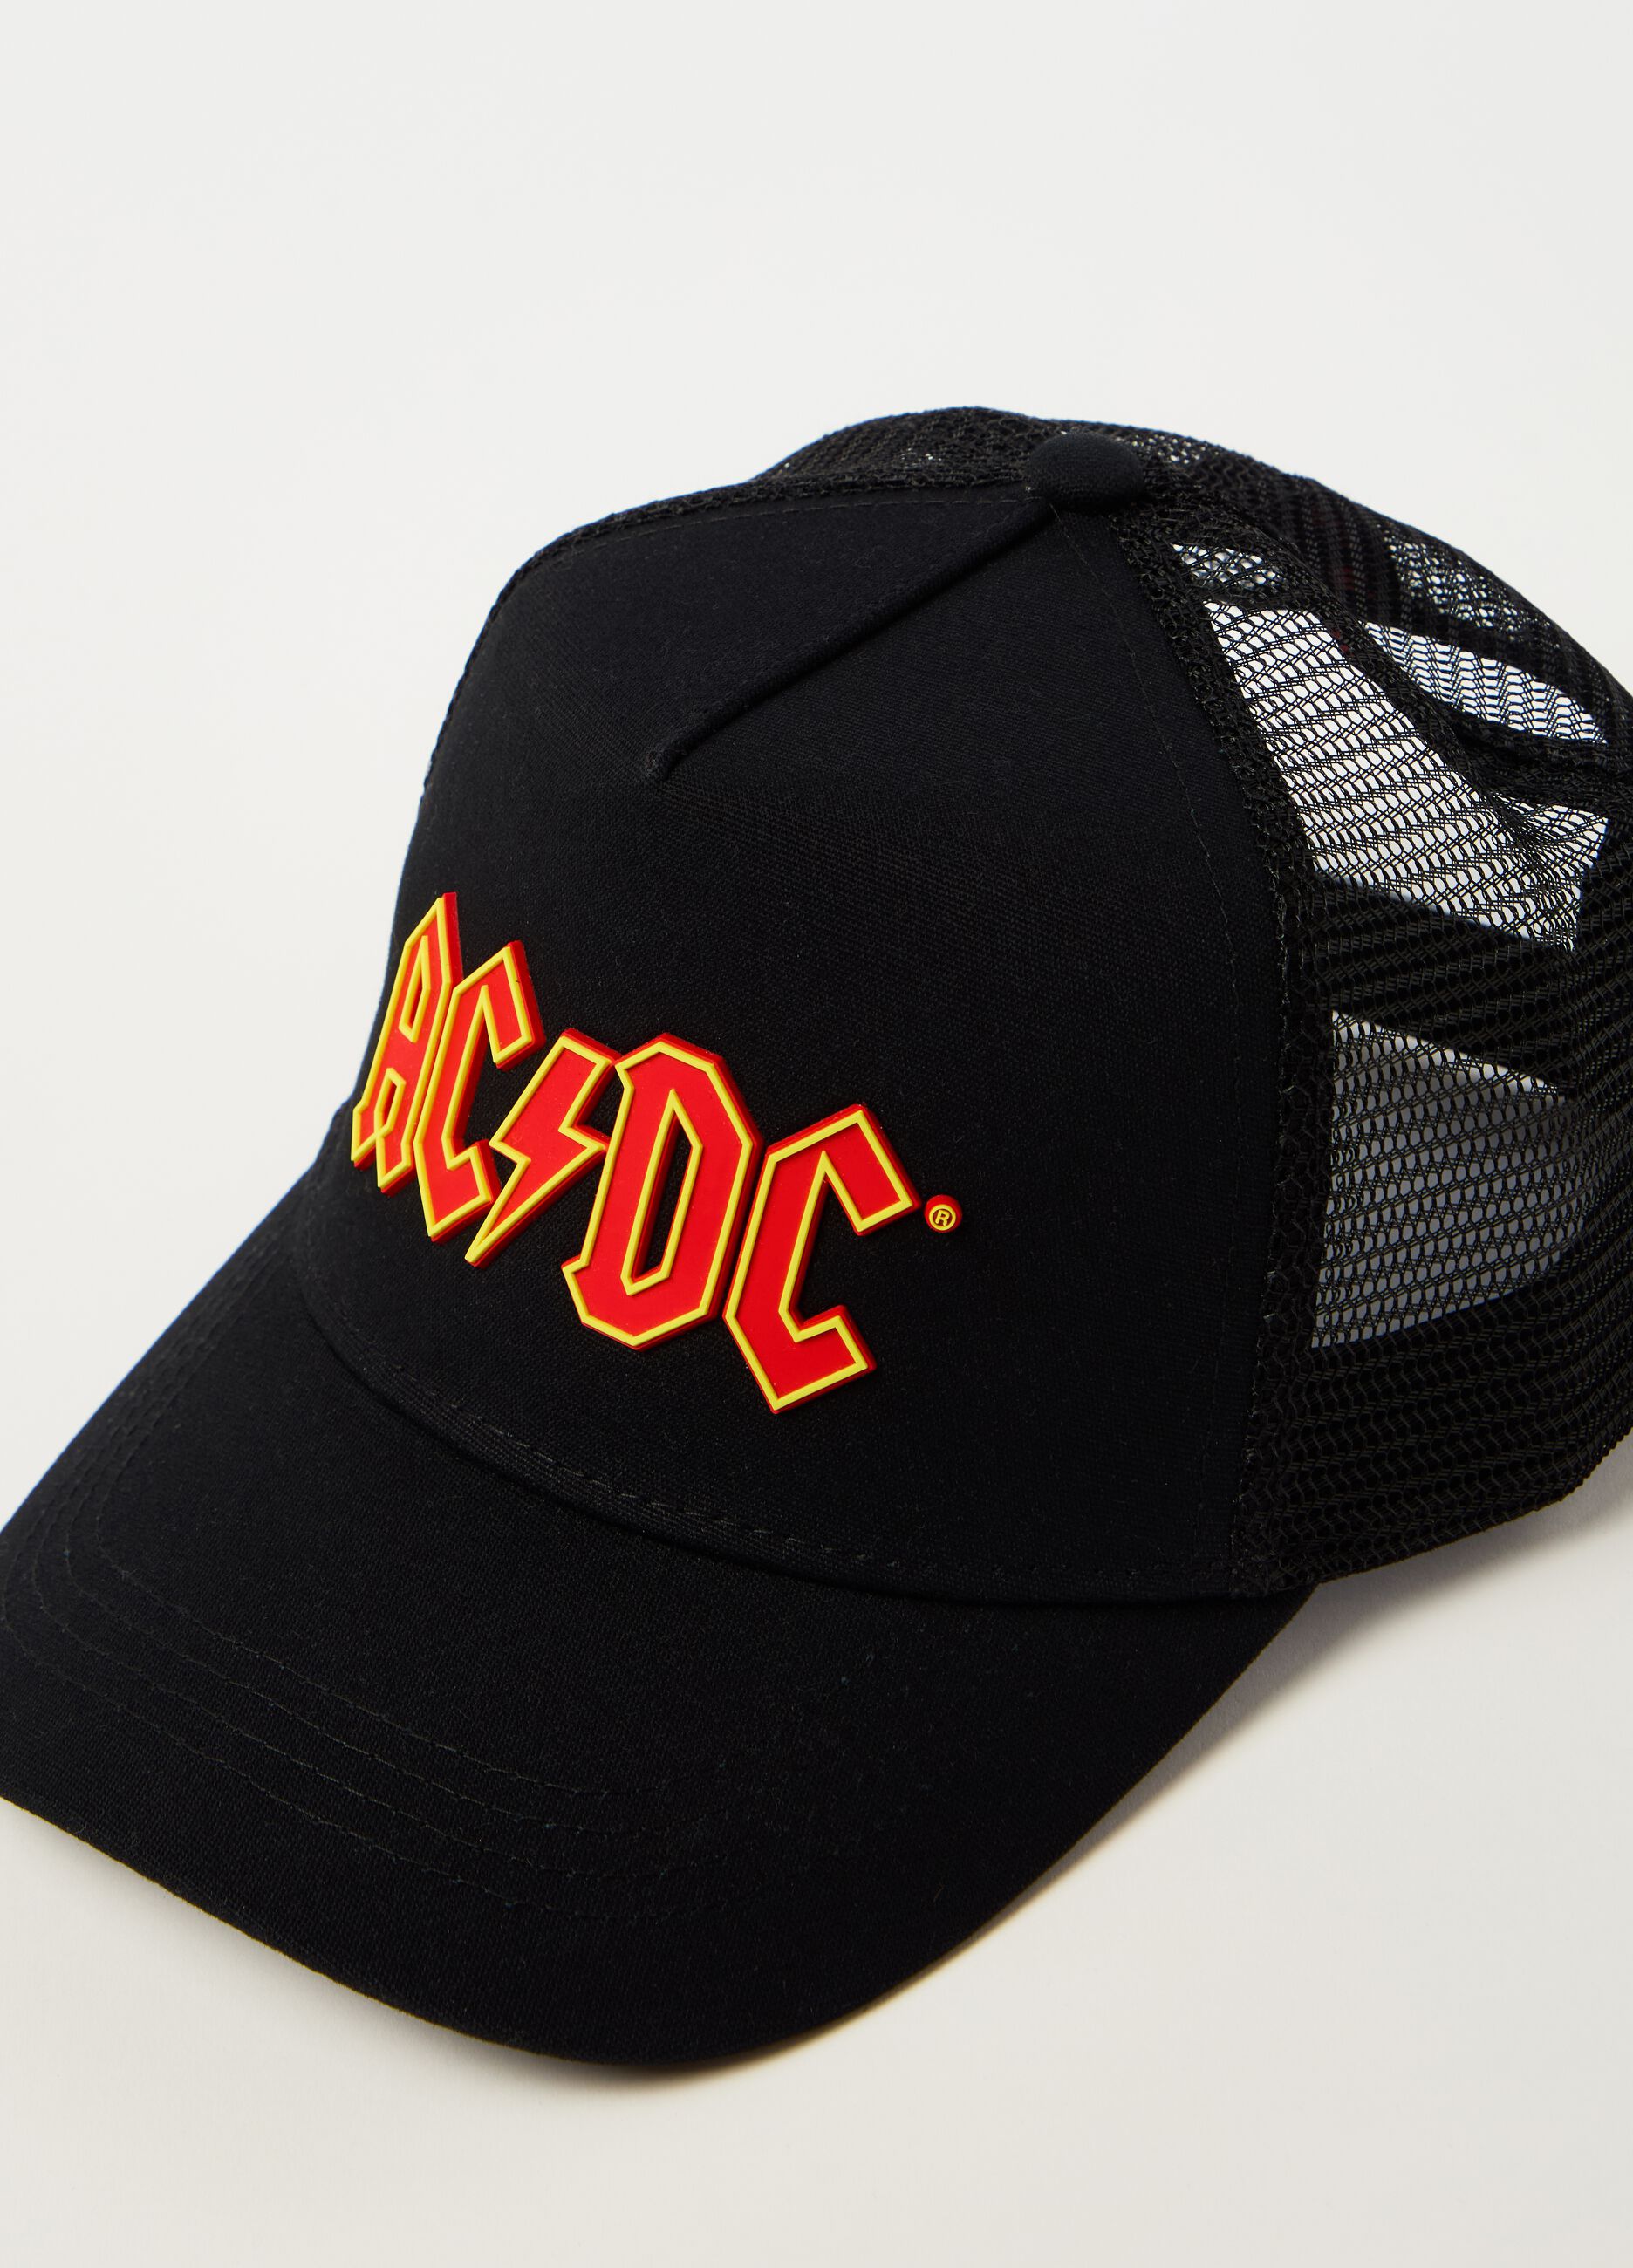 Baseball cap with AC/DC logo